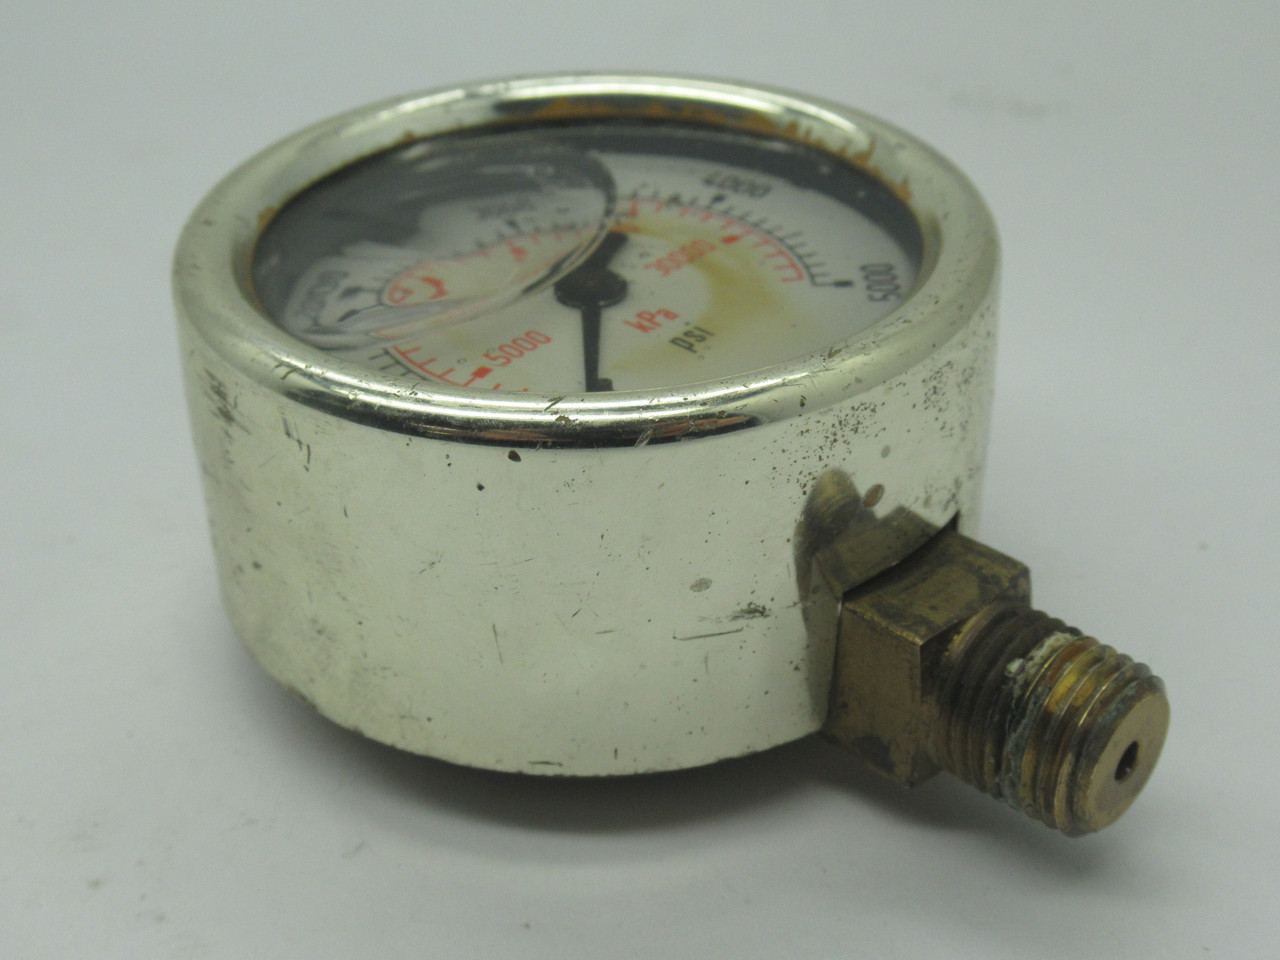 Wika 9692113 Liquid Filled Pressure Gauge 0-5000psi 2-1/2" Diam 1/4" NPT USED